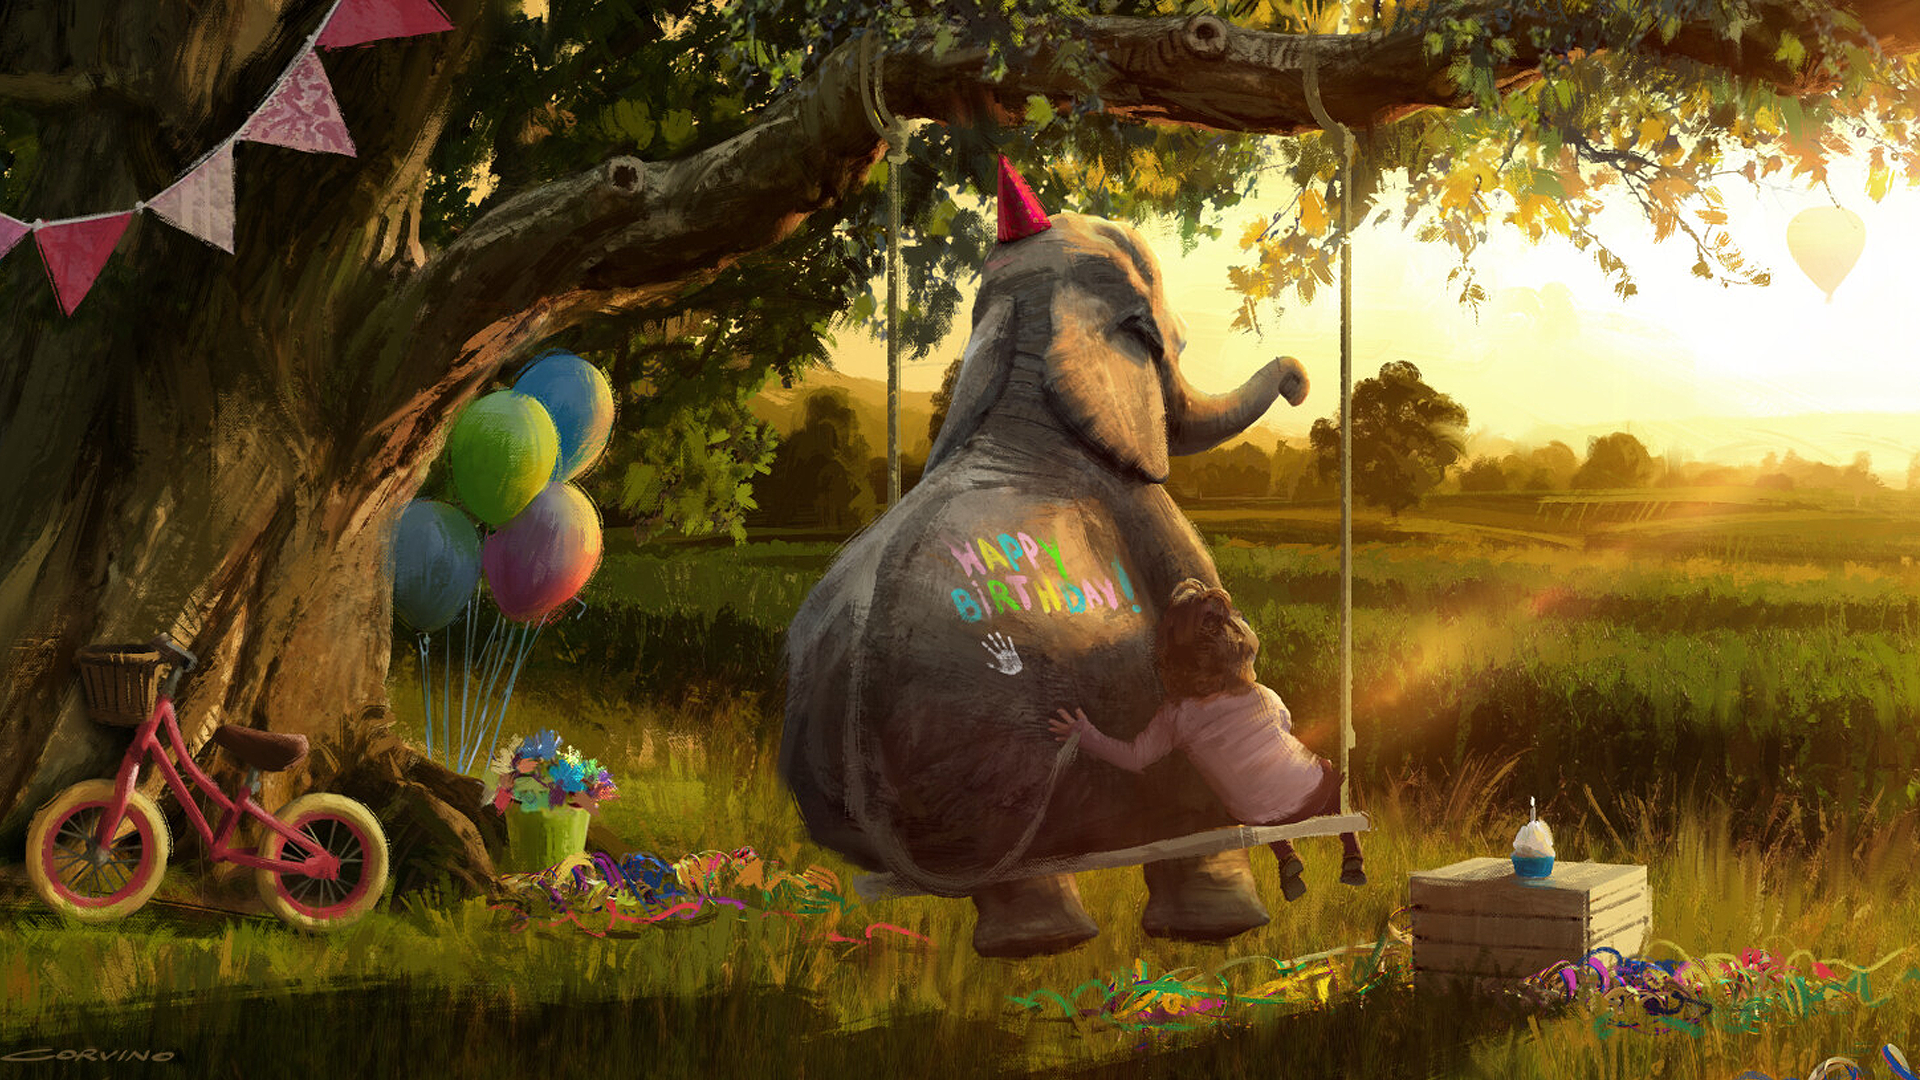 Francesco Corvino Digital Art Artwork Elephant Children Sunset Birthday Balloon Bycicle Trees Grass 1920x1080